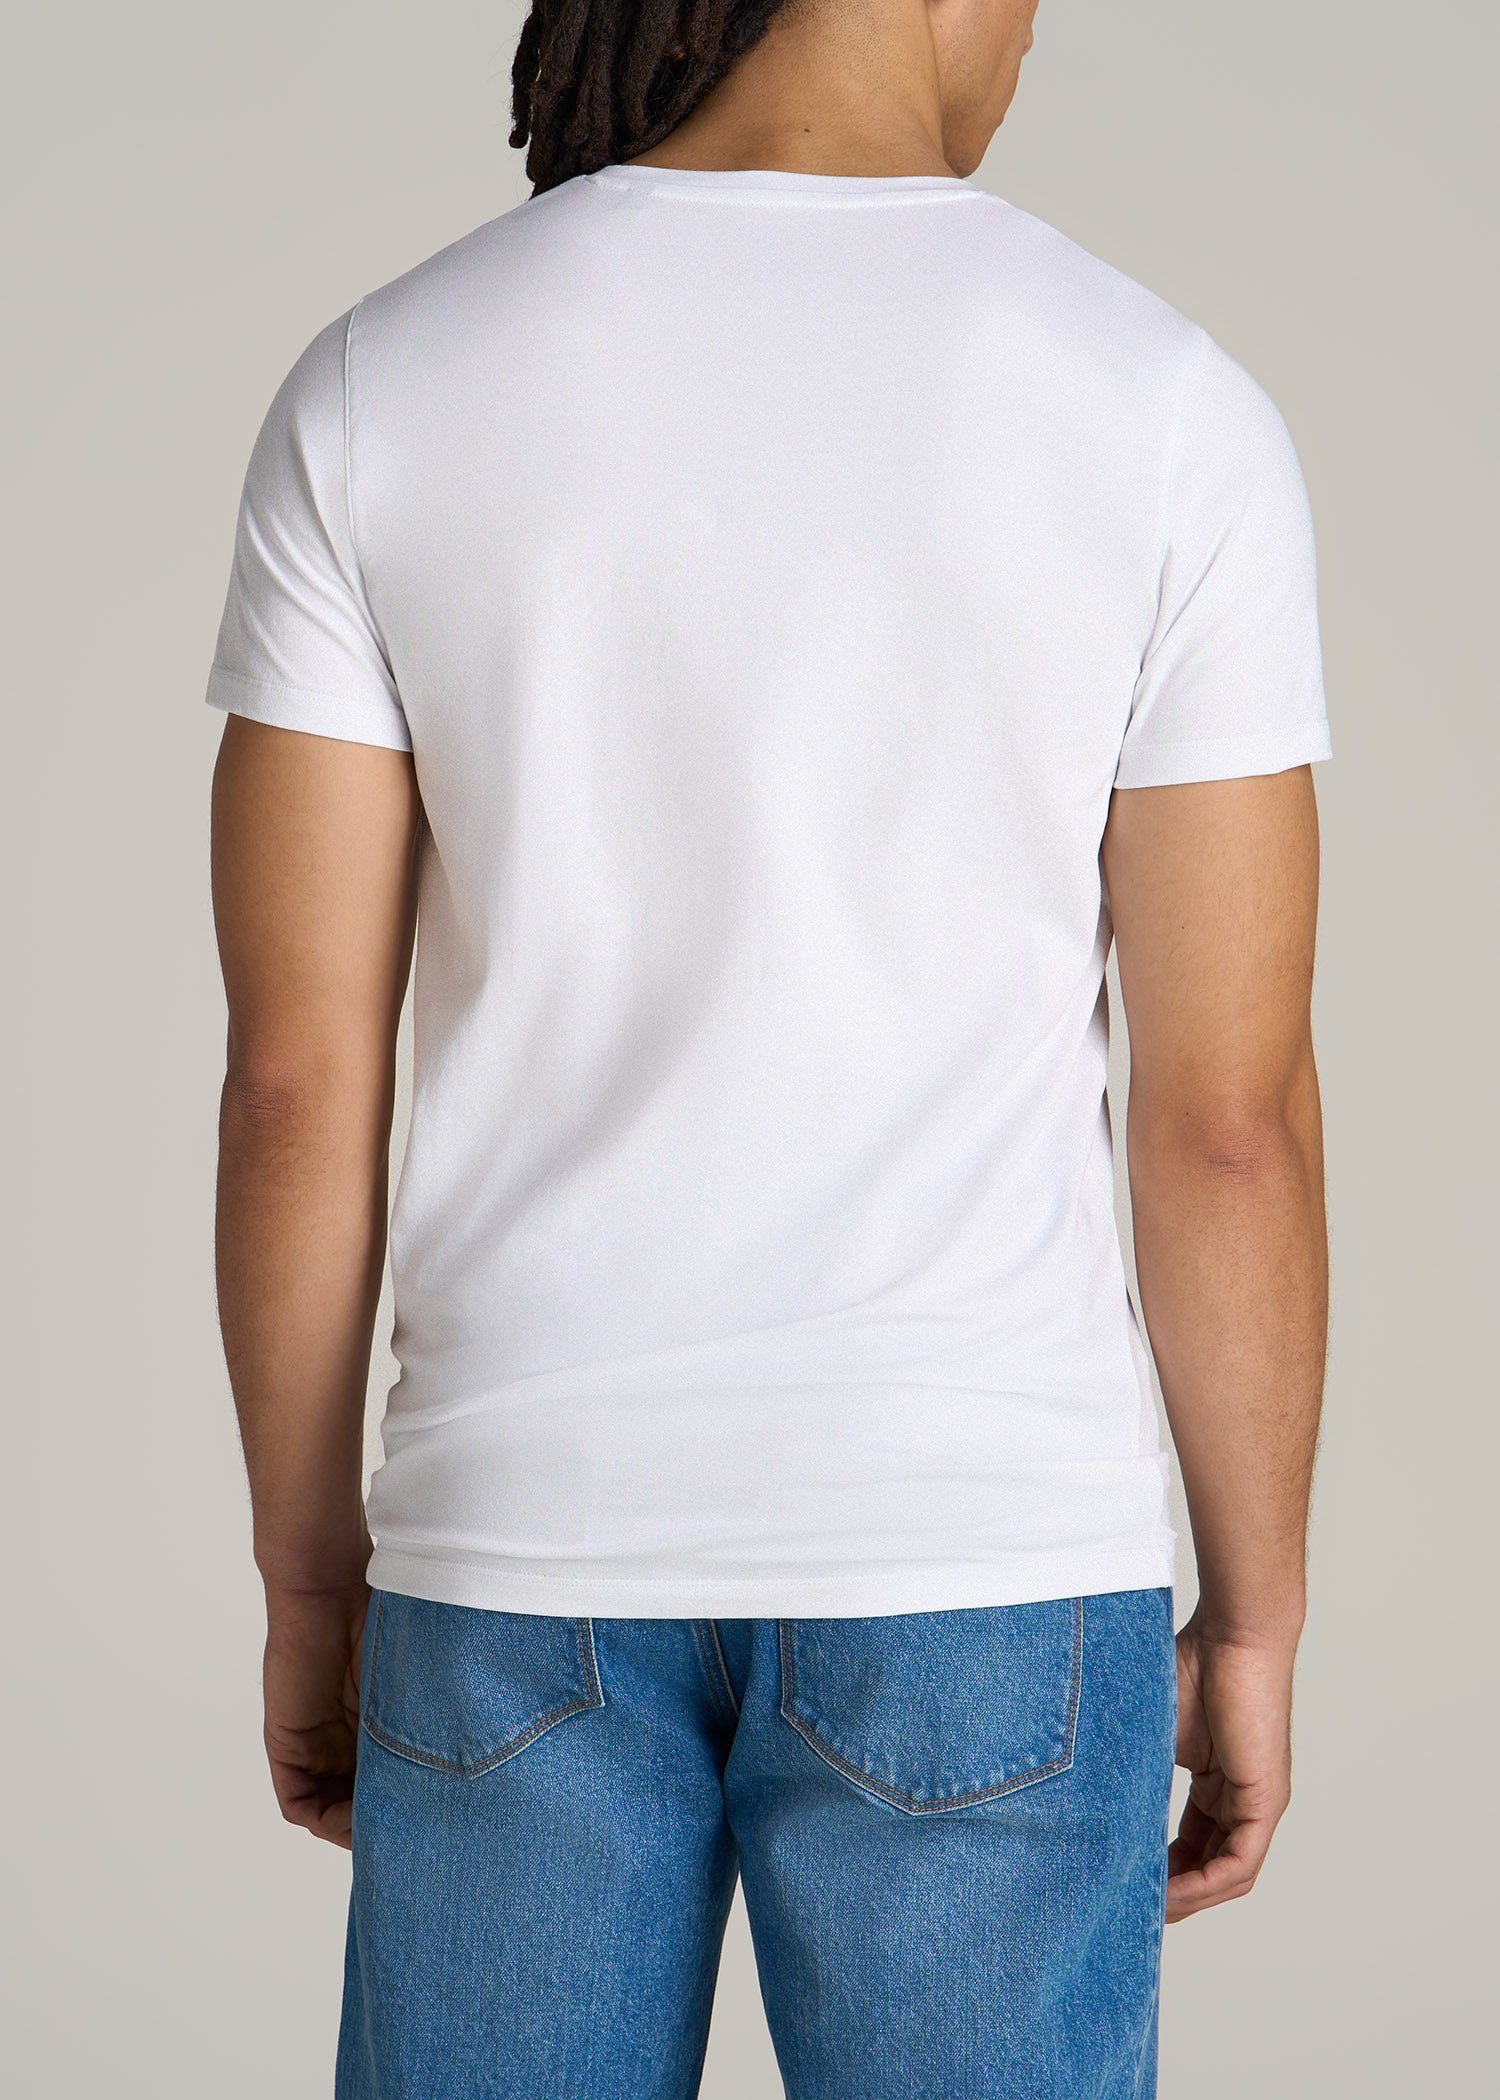 Stretch Cotton V-Neck T-Shirt for Tall Men